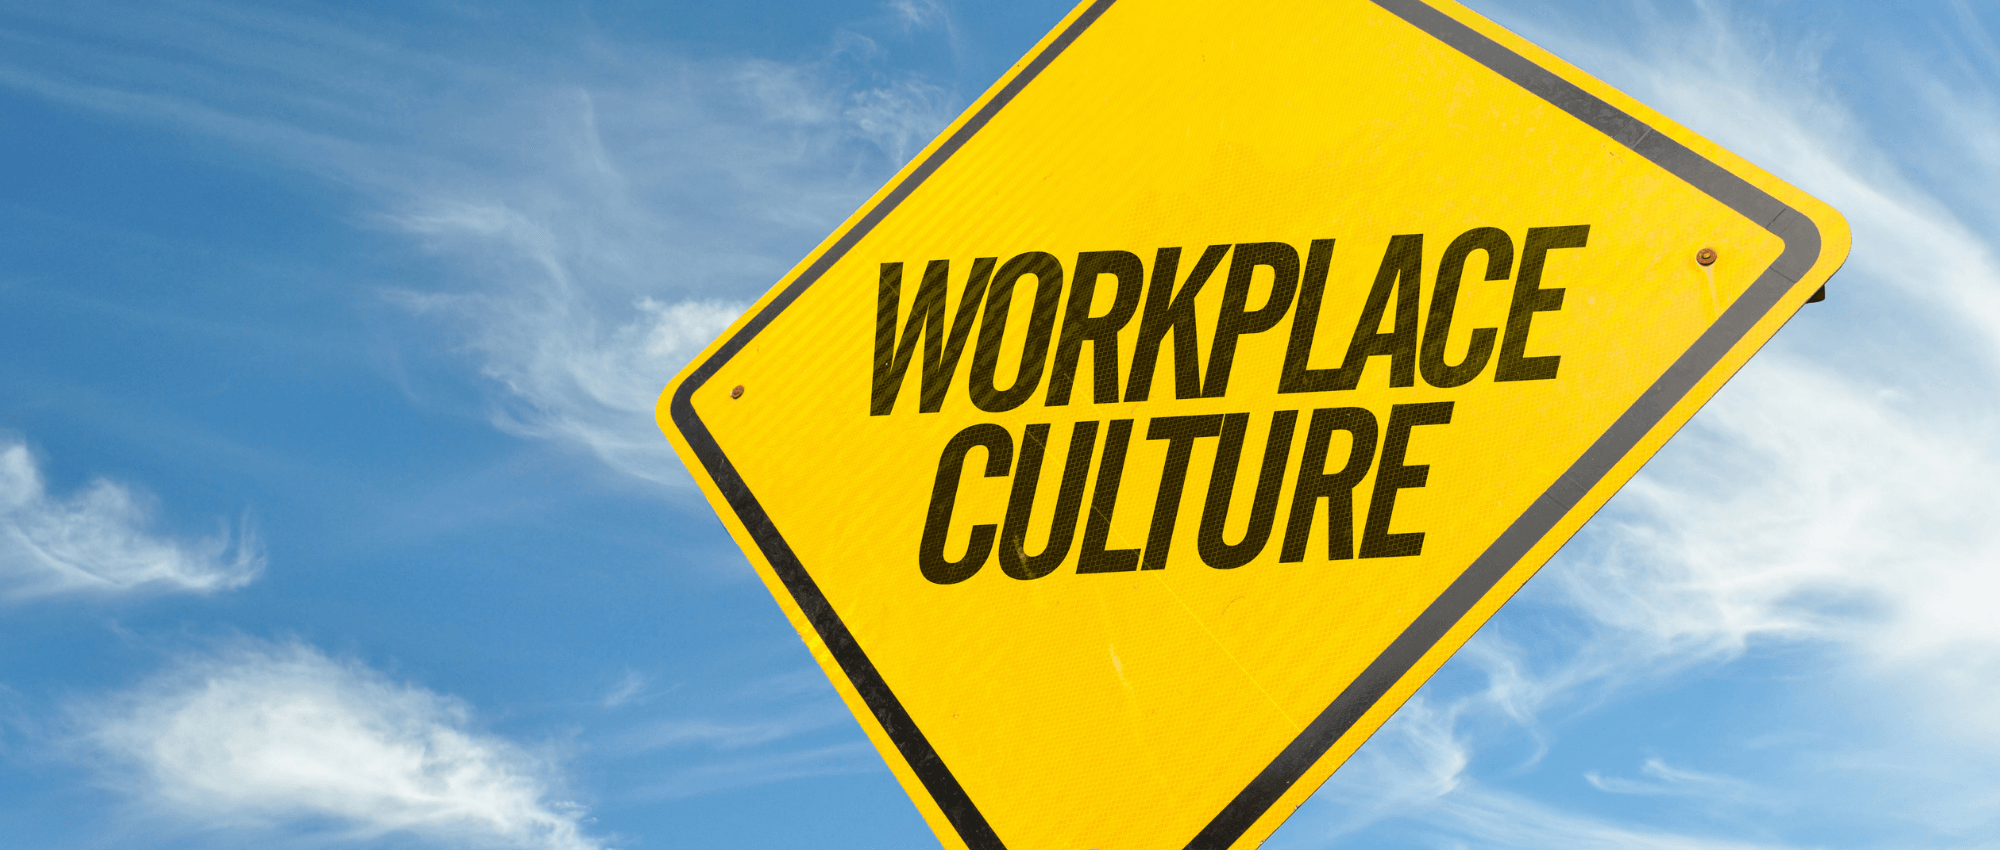 Canadian workplace culture webinar